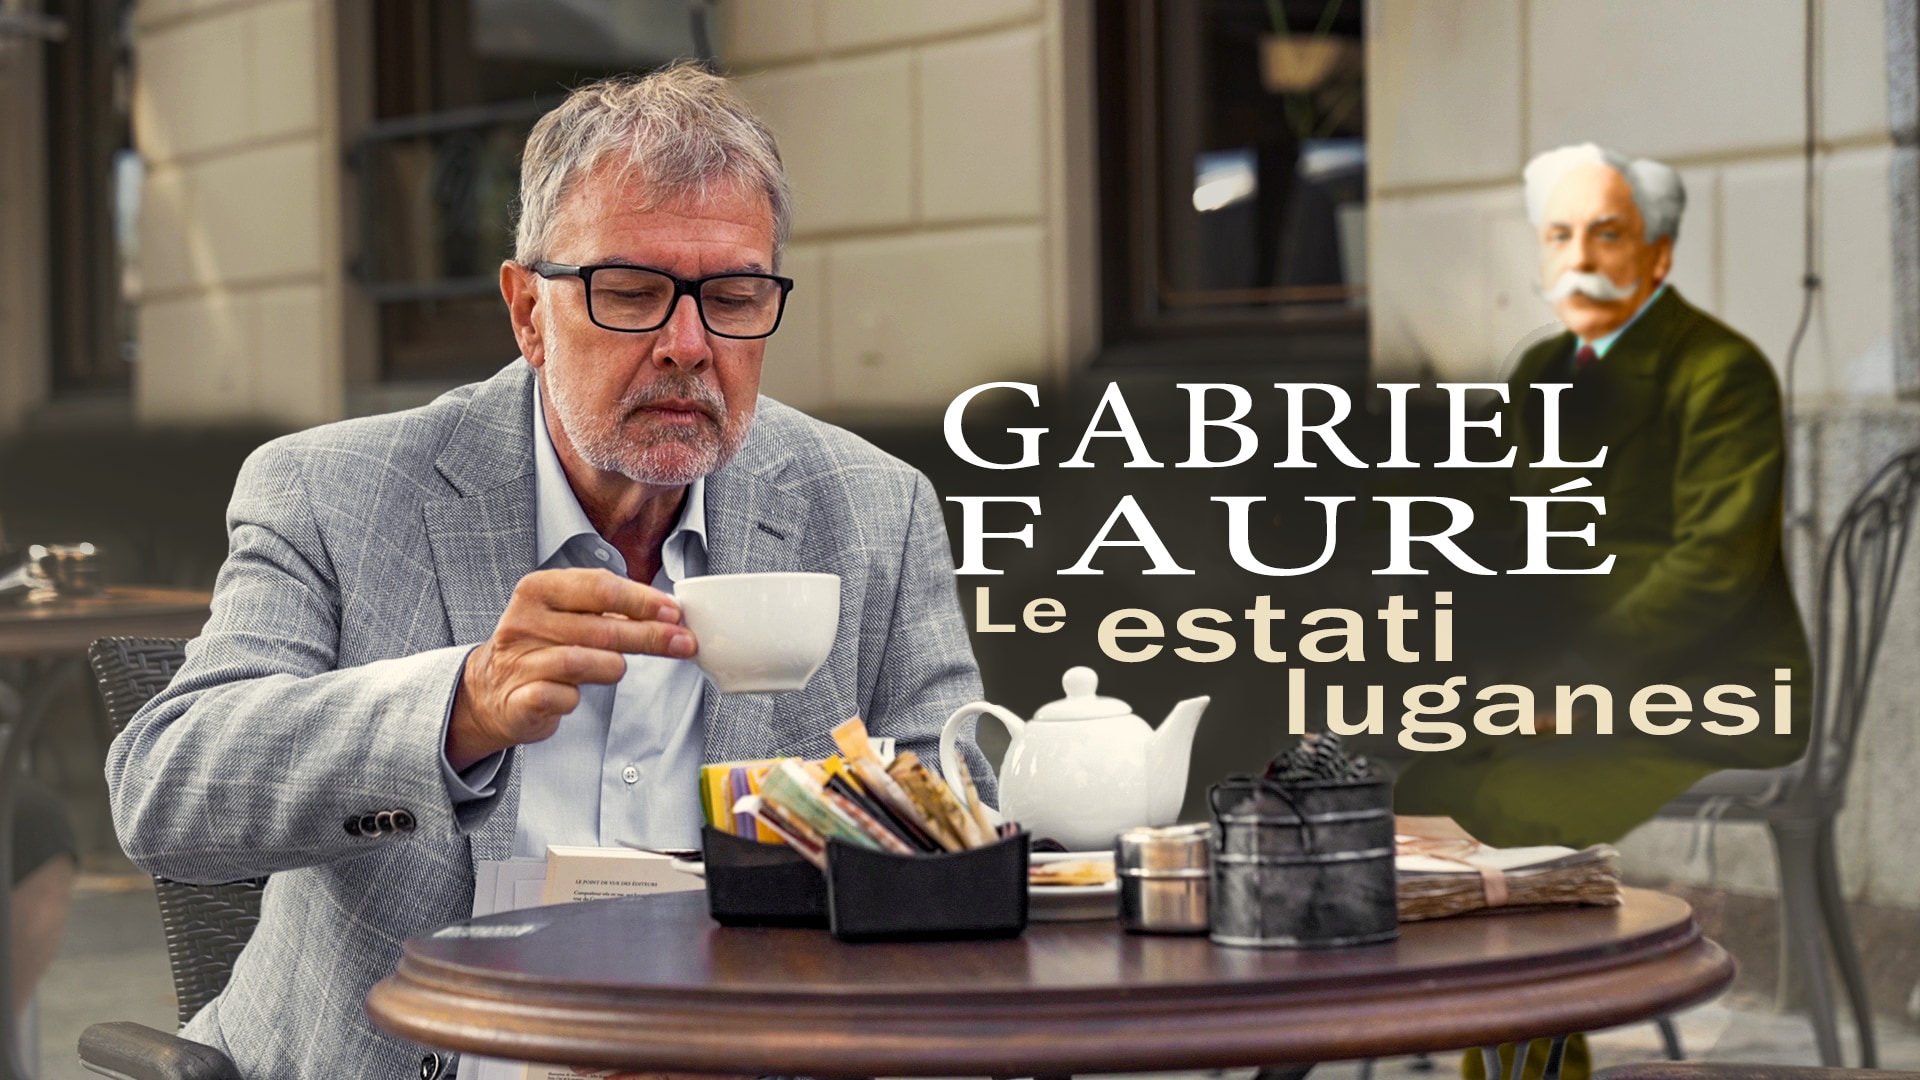 Gabriel Fauré - Le estati luganesi